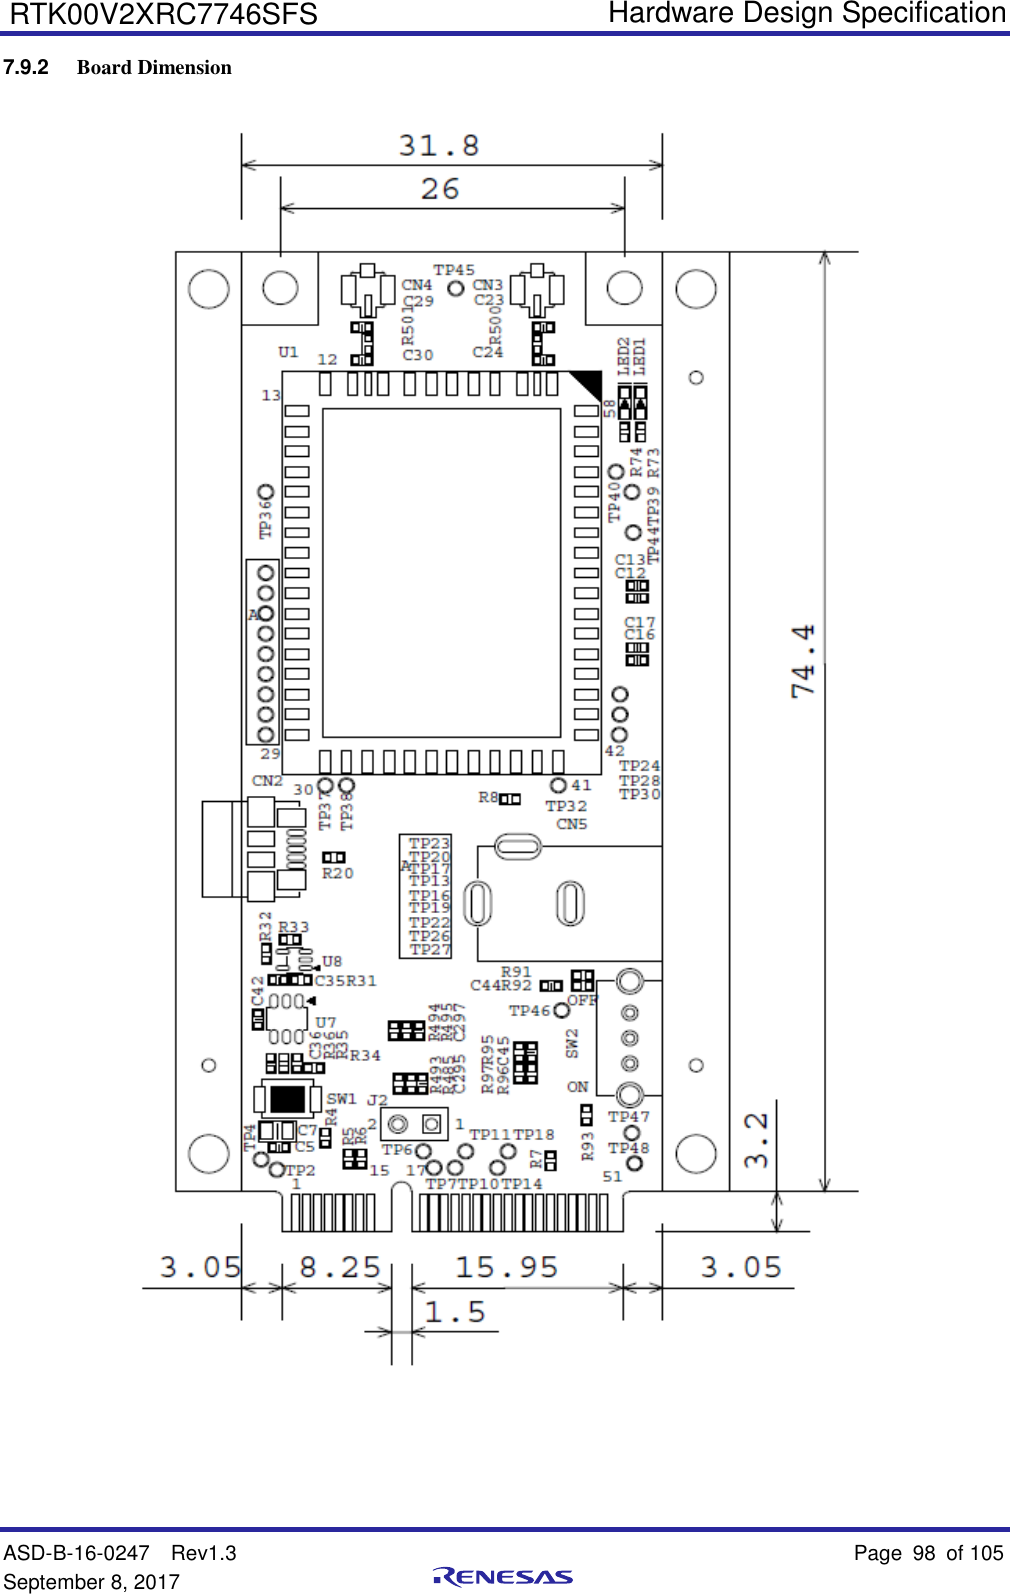   Hardware Design Specification ASD-B-16-0247  Rev1.3    Page 98  of 105 September 8, 2017      RTK00V2XRC7746SFS 7.9.2 Board Dimension  